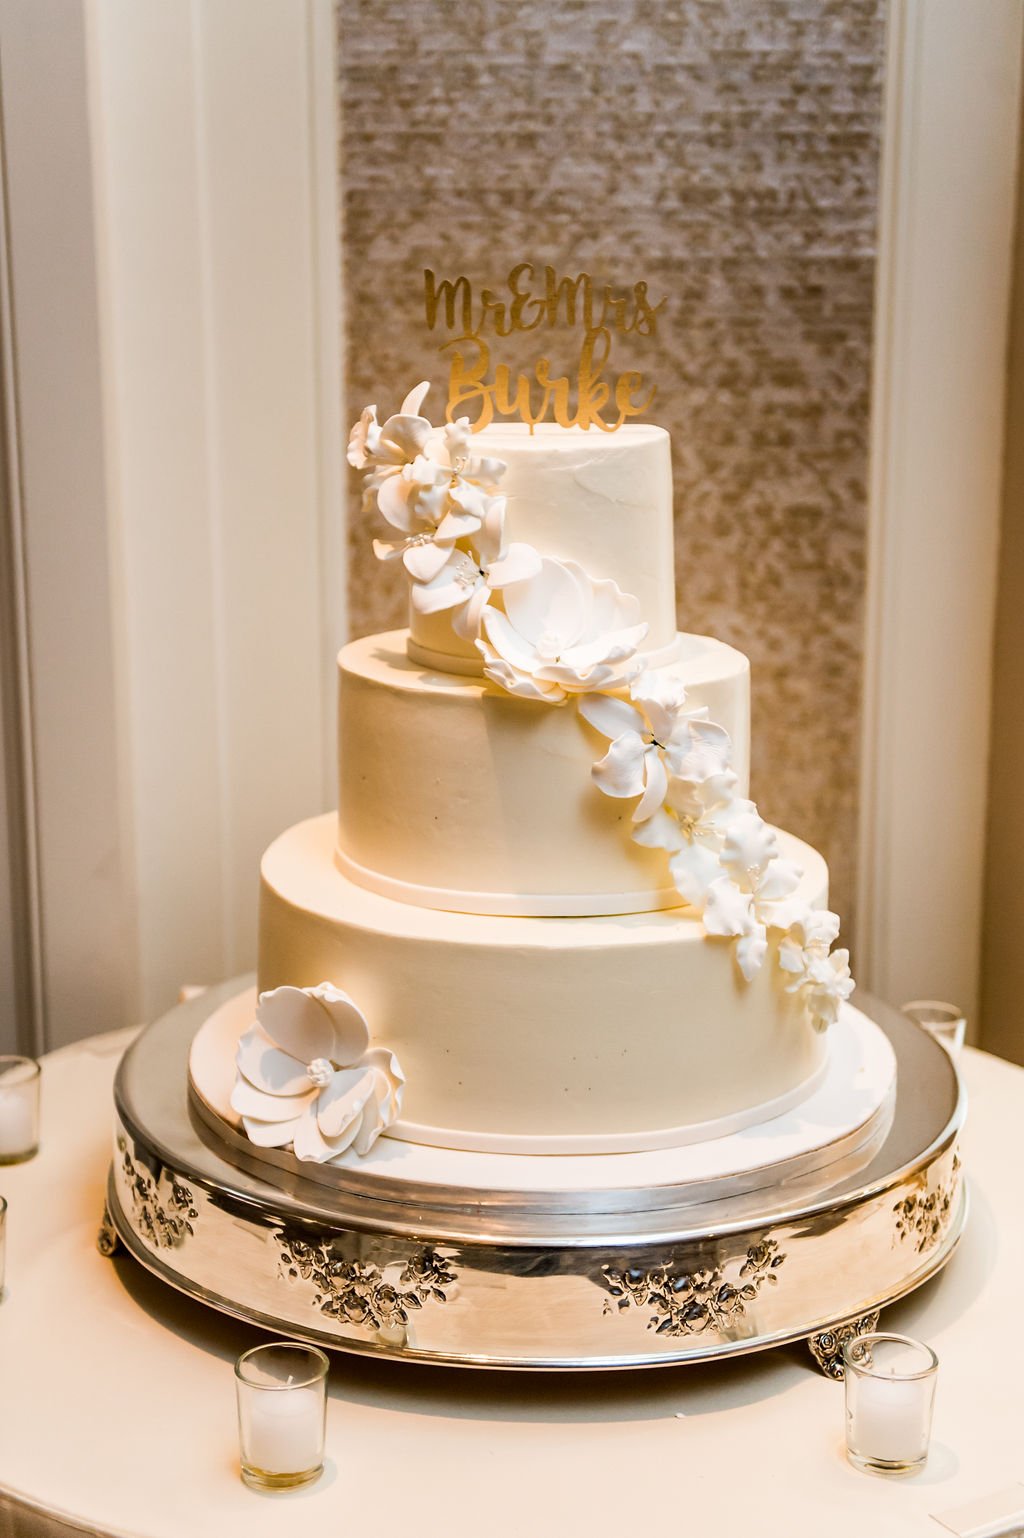 Three tier wedding cake with sugar flowers